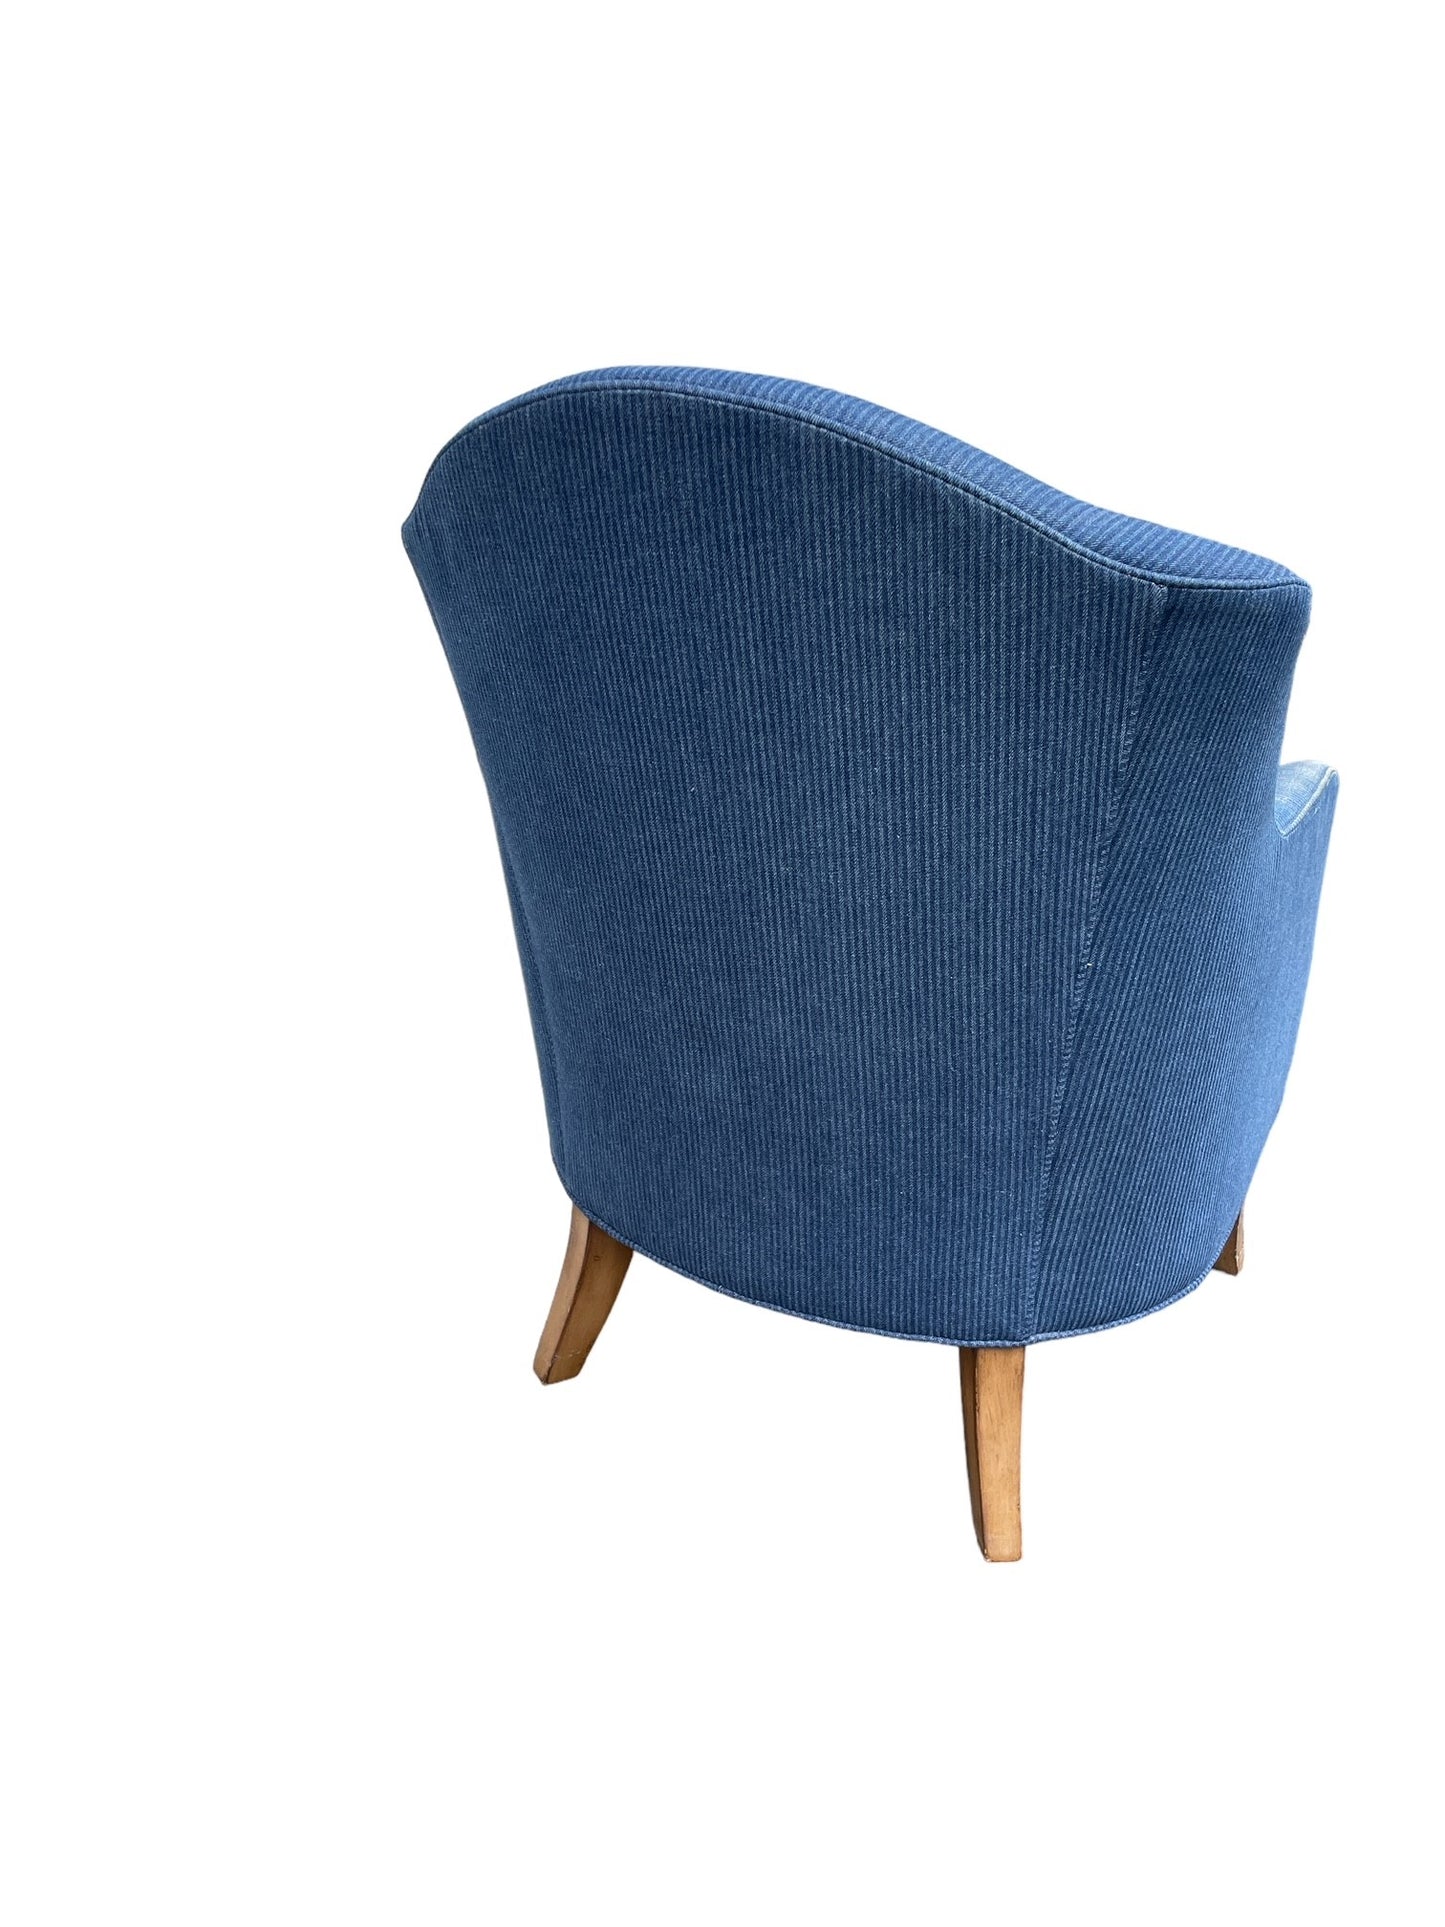 Custom Stroheim Upholstered Classics Denim Chair & Ottoman Chair LY200-9